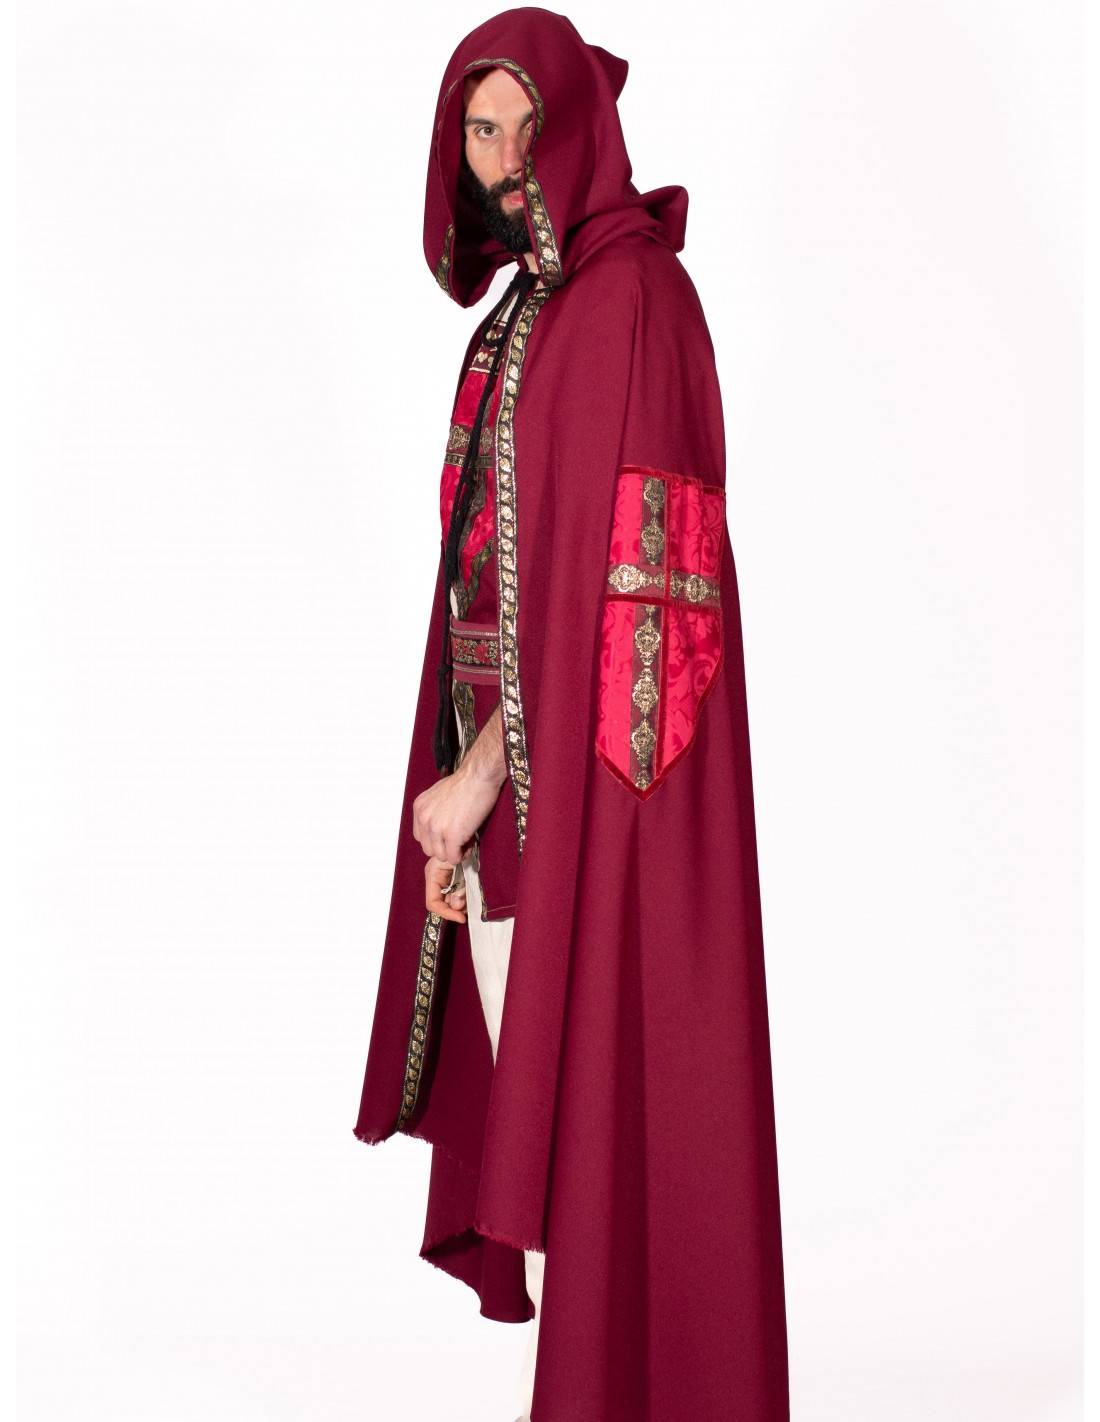 Hooded Cloak With Arm Slits Medieval Cloak Viking Cloak 